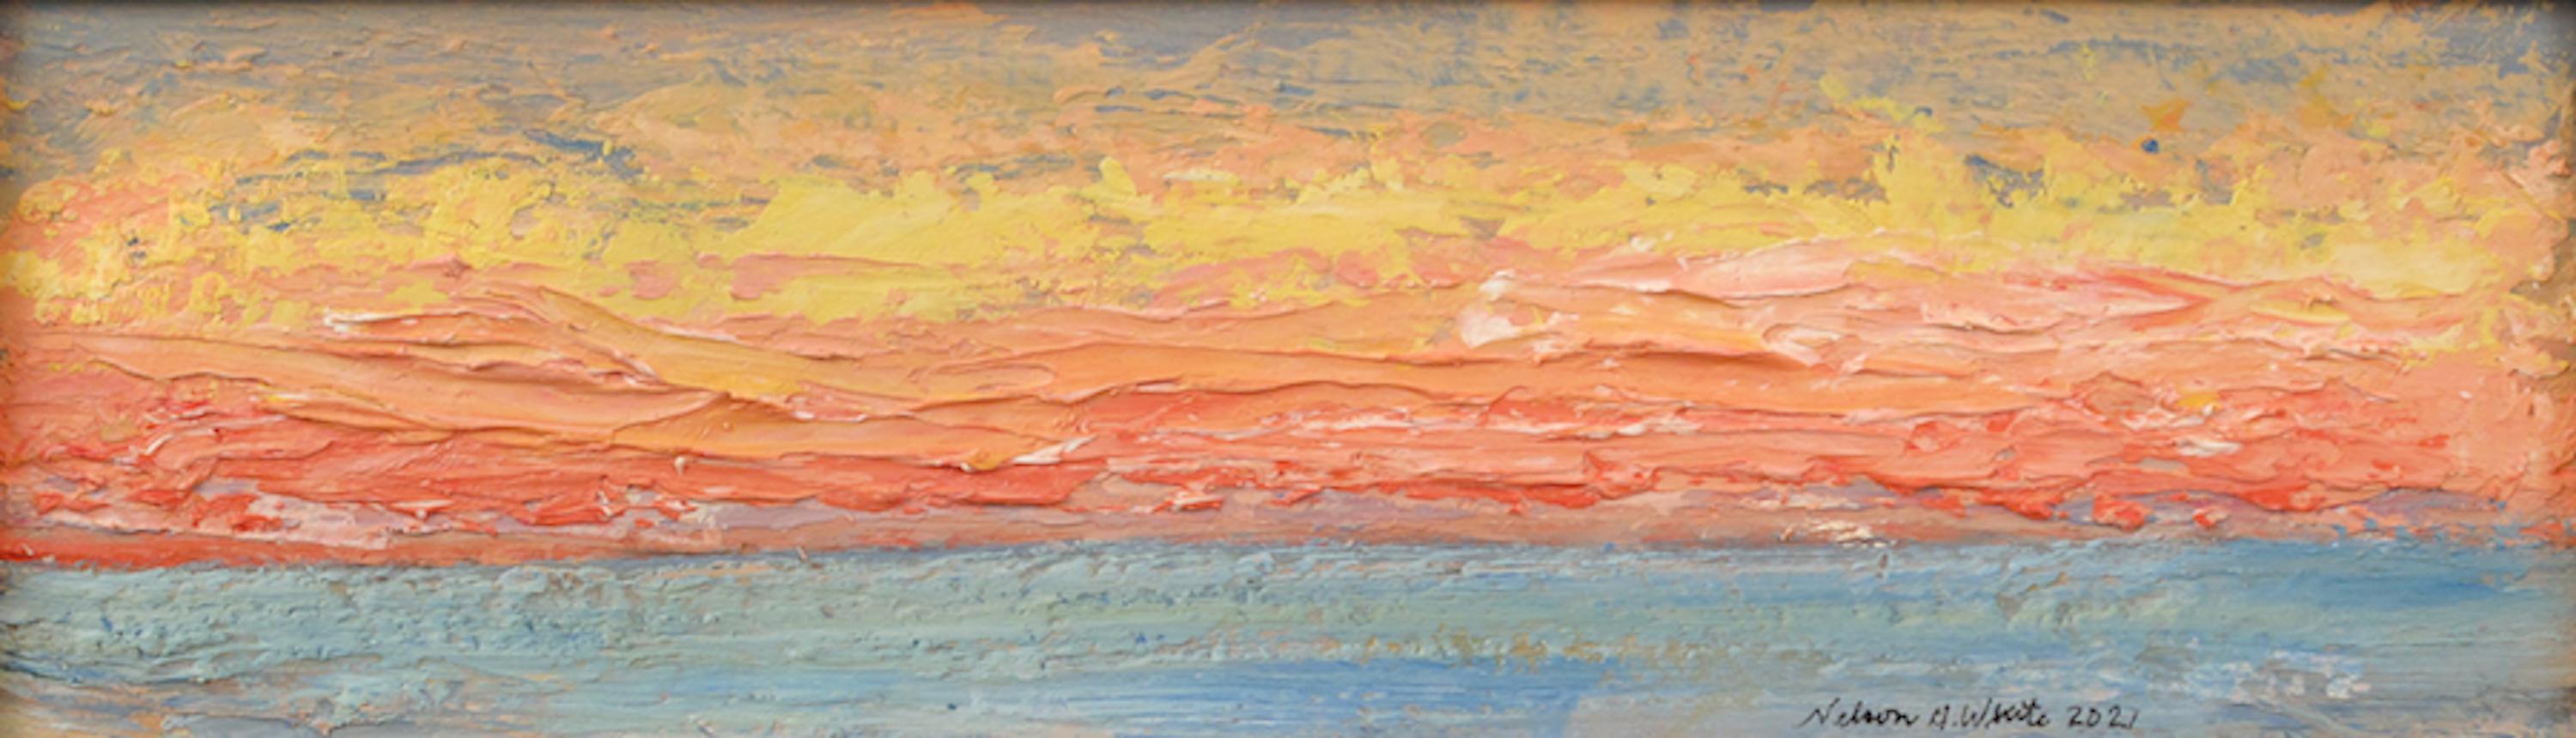 Nelson White Landscape Painting - Sunset Sea & Sky 02.21.2021